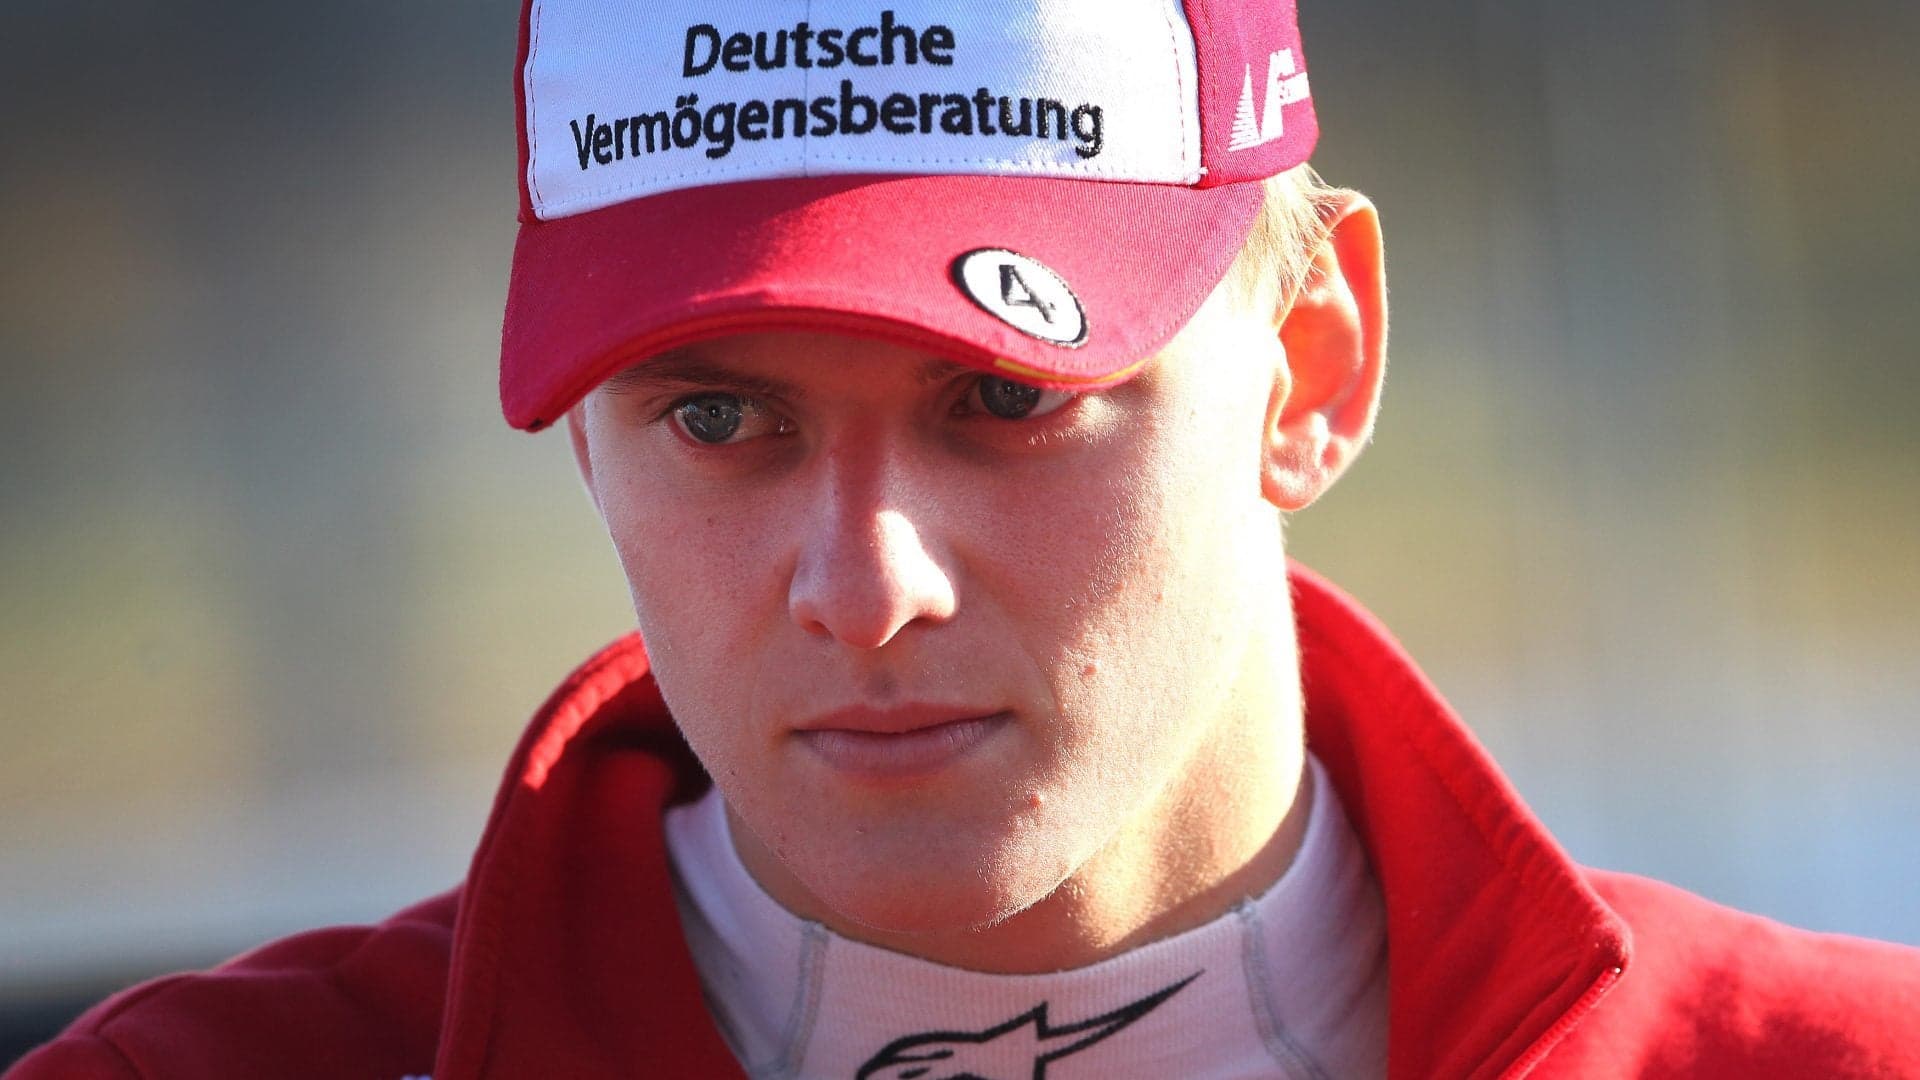 Mick Schumacher to Make Formula 1 Test Debut With Ferrari in Bahrain: Report